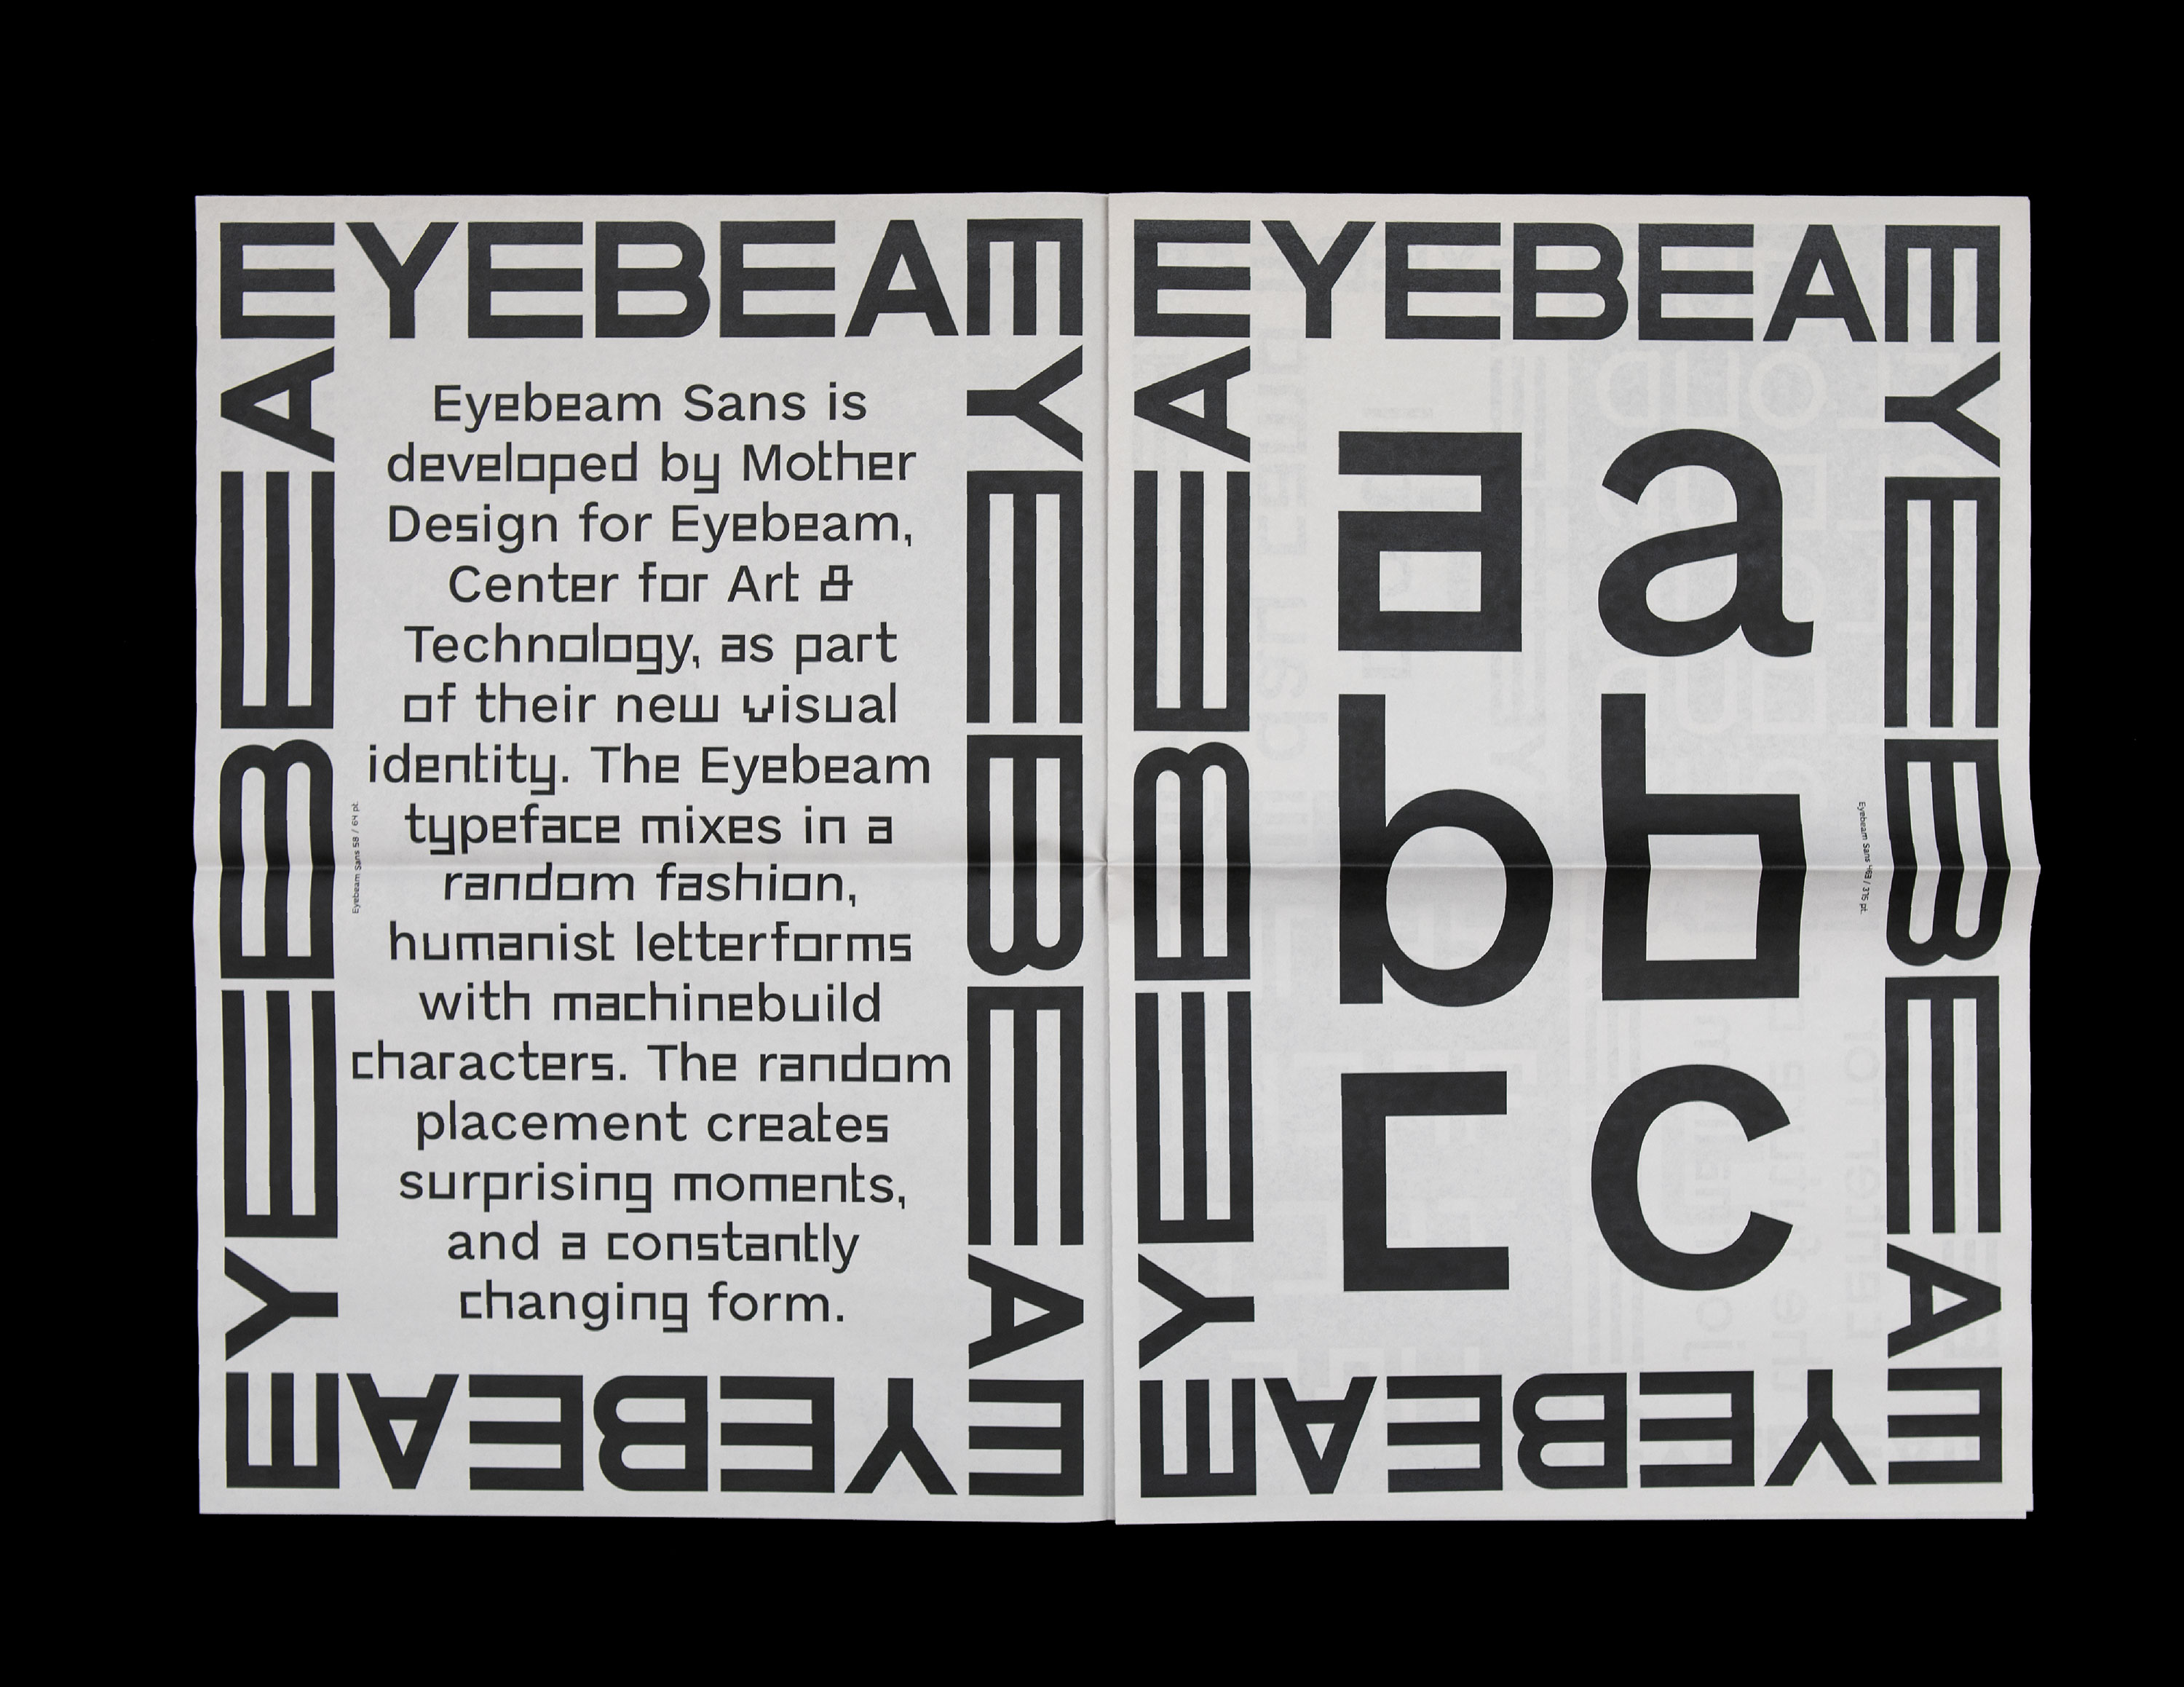 Eyebeam, Mother Design, Visual Identity, Logo, Yaya Xu, Matt van Leeuwen, Matthijs van Leeuwen